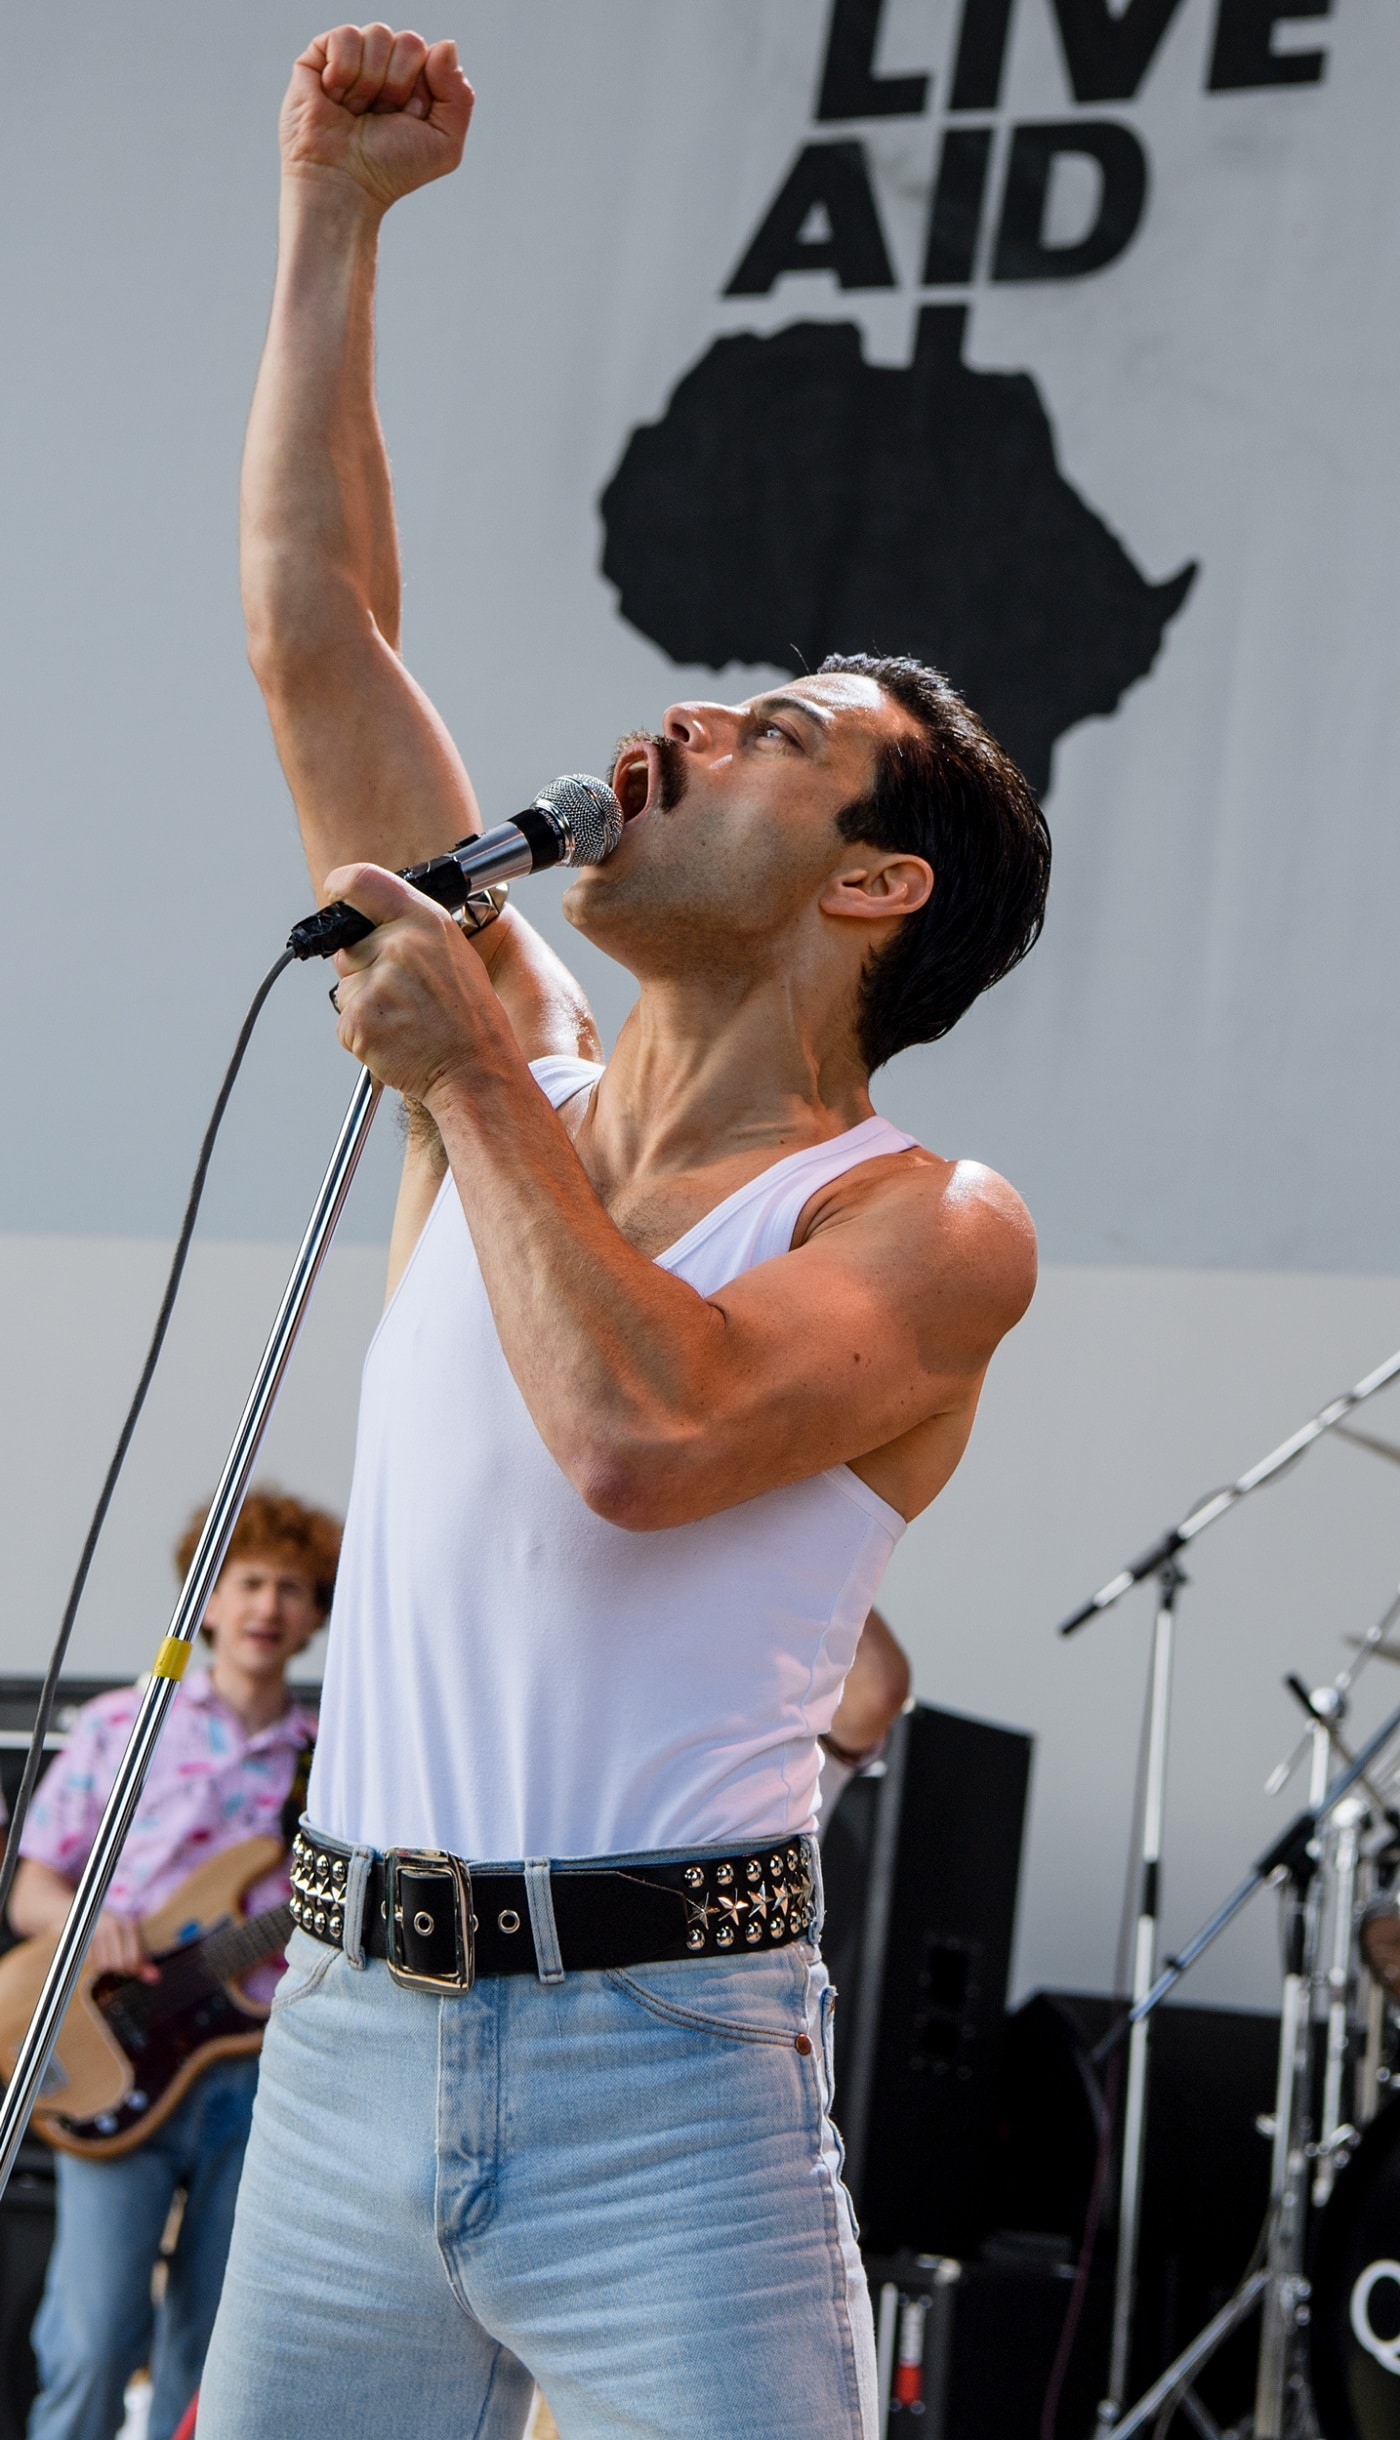 Bohemian Rhapsody: How Rami Malek Recreated the Magic that is Queen